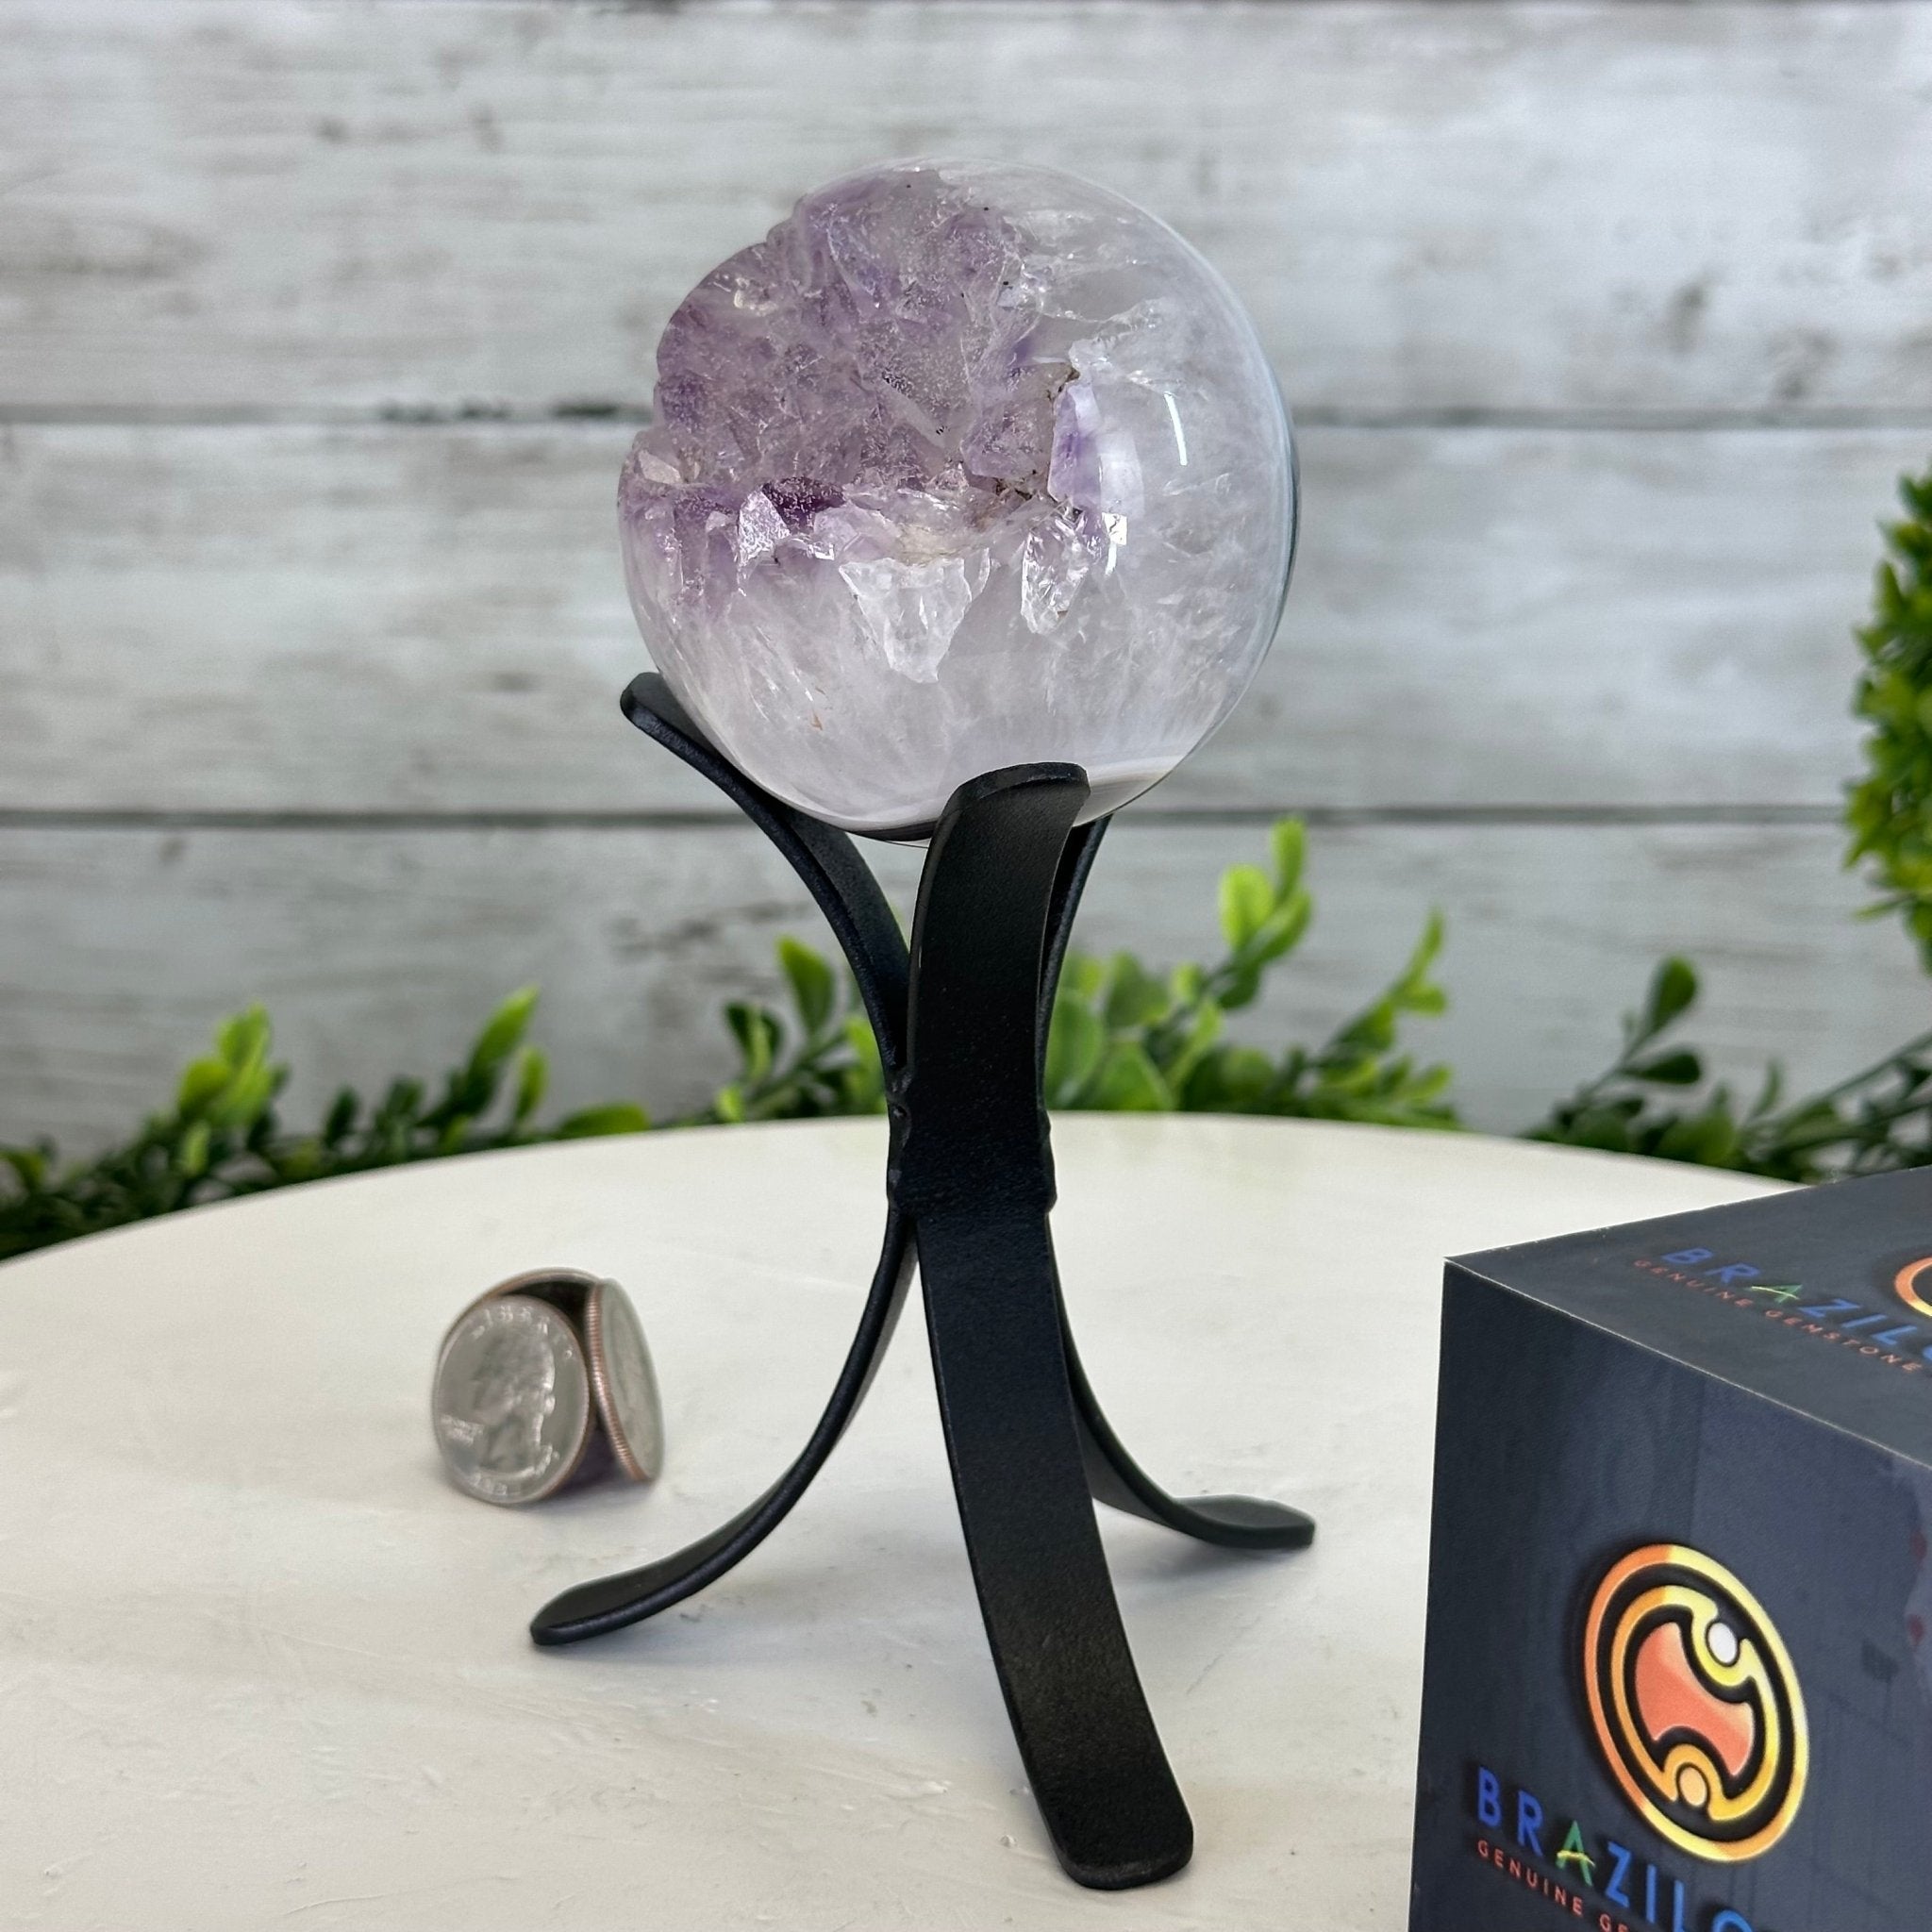 Druzy Amethyst Sphere on a Metal Stand, 0.8 lbs & 6" Tall #5630-0033 - Brazil GemsBrazil GemsDruzy Amethyst Sphere on a Metal Stand, 0.8 lbs & 6" Tall #5630-0033Spheres5630-0033